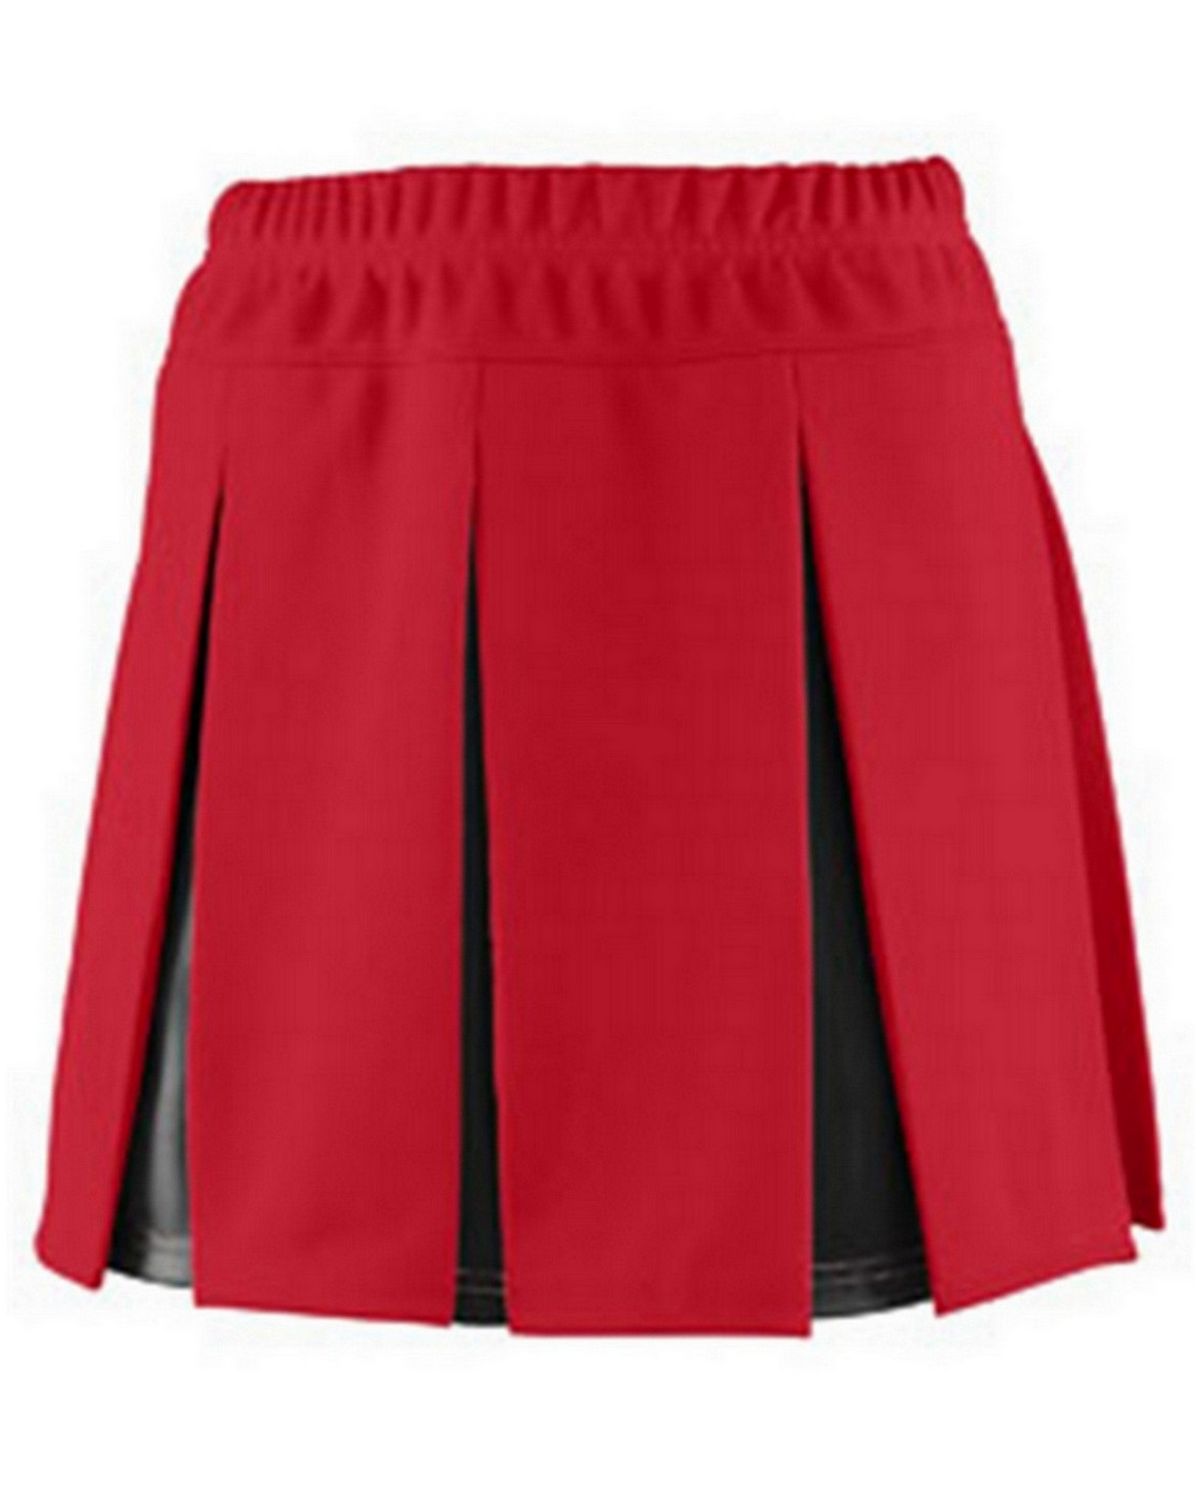 Buy Augusta Sportswear 9116 Girls Liberty Skirt